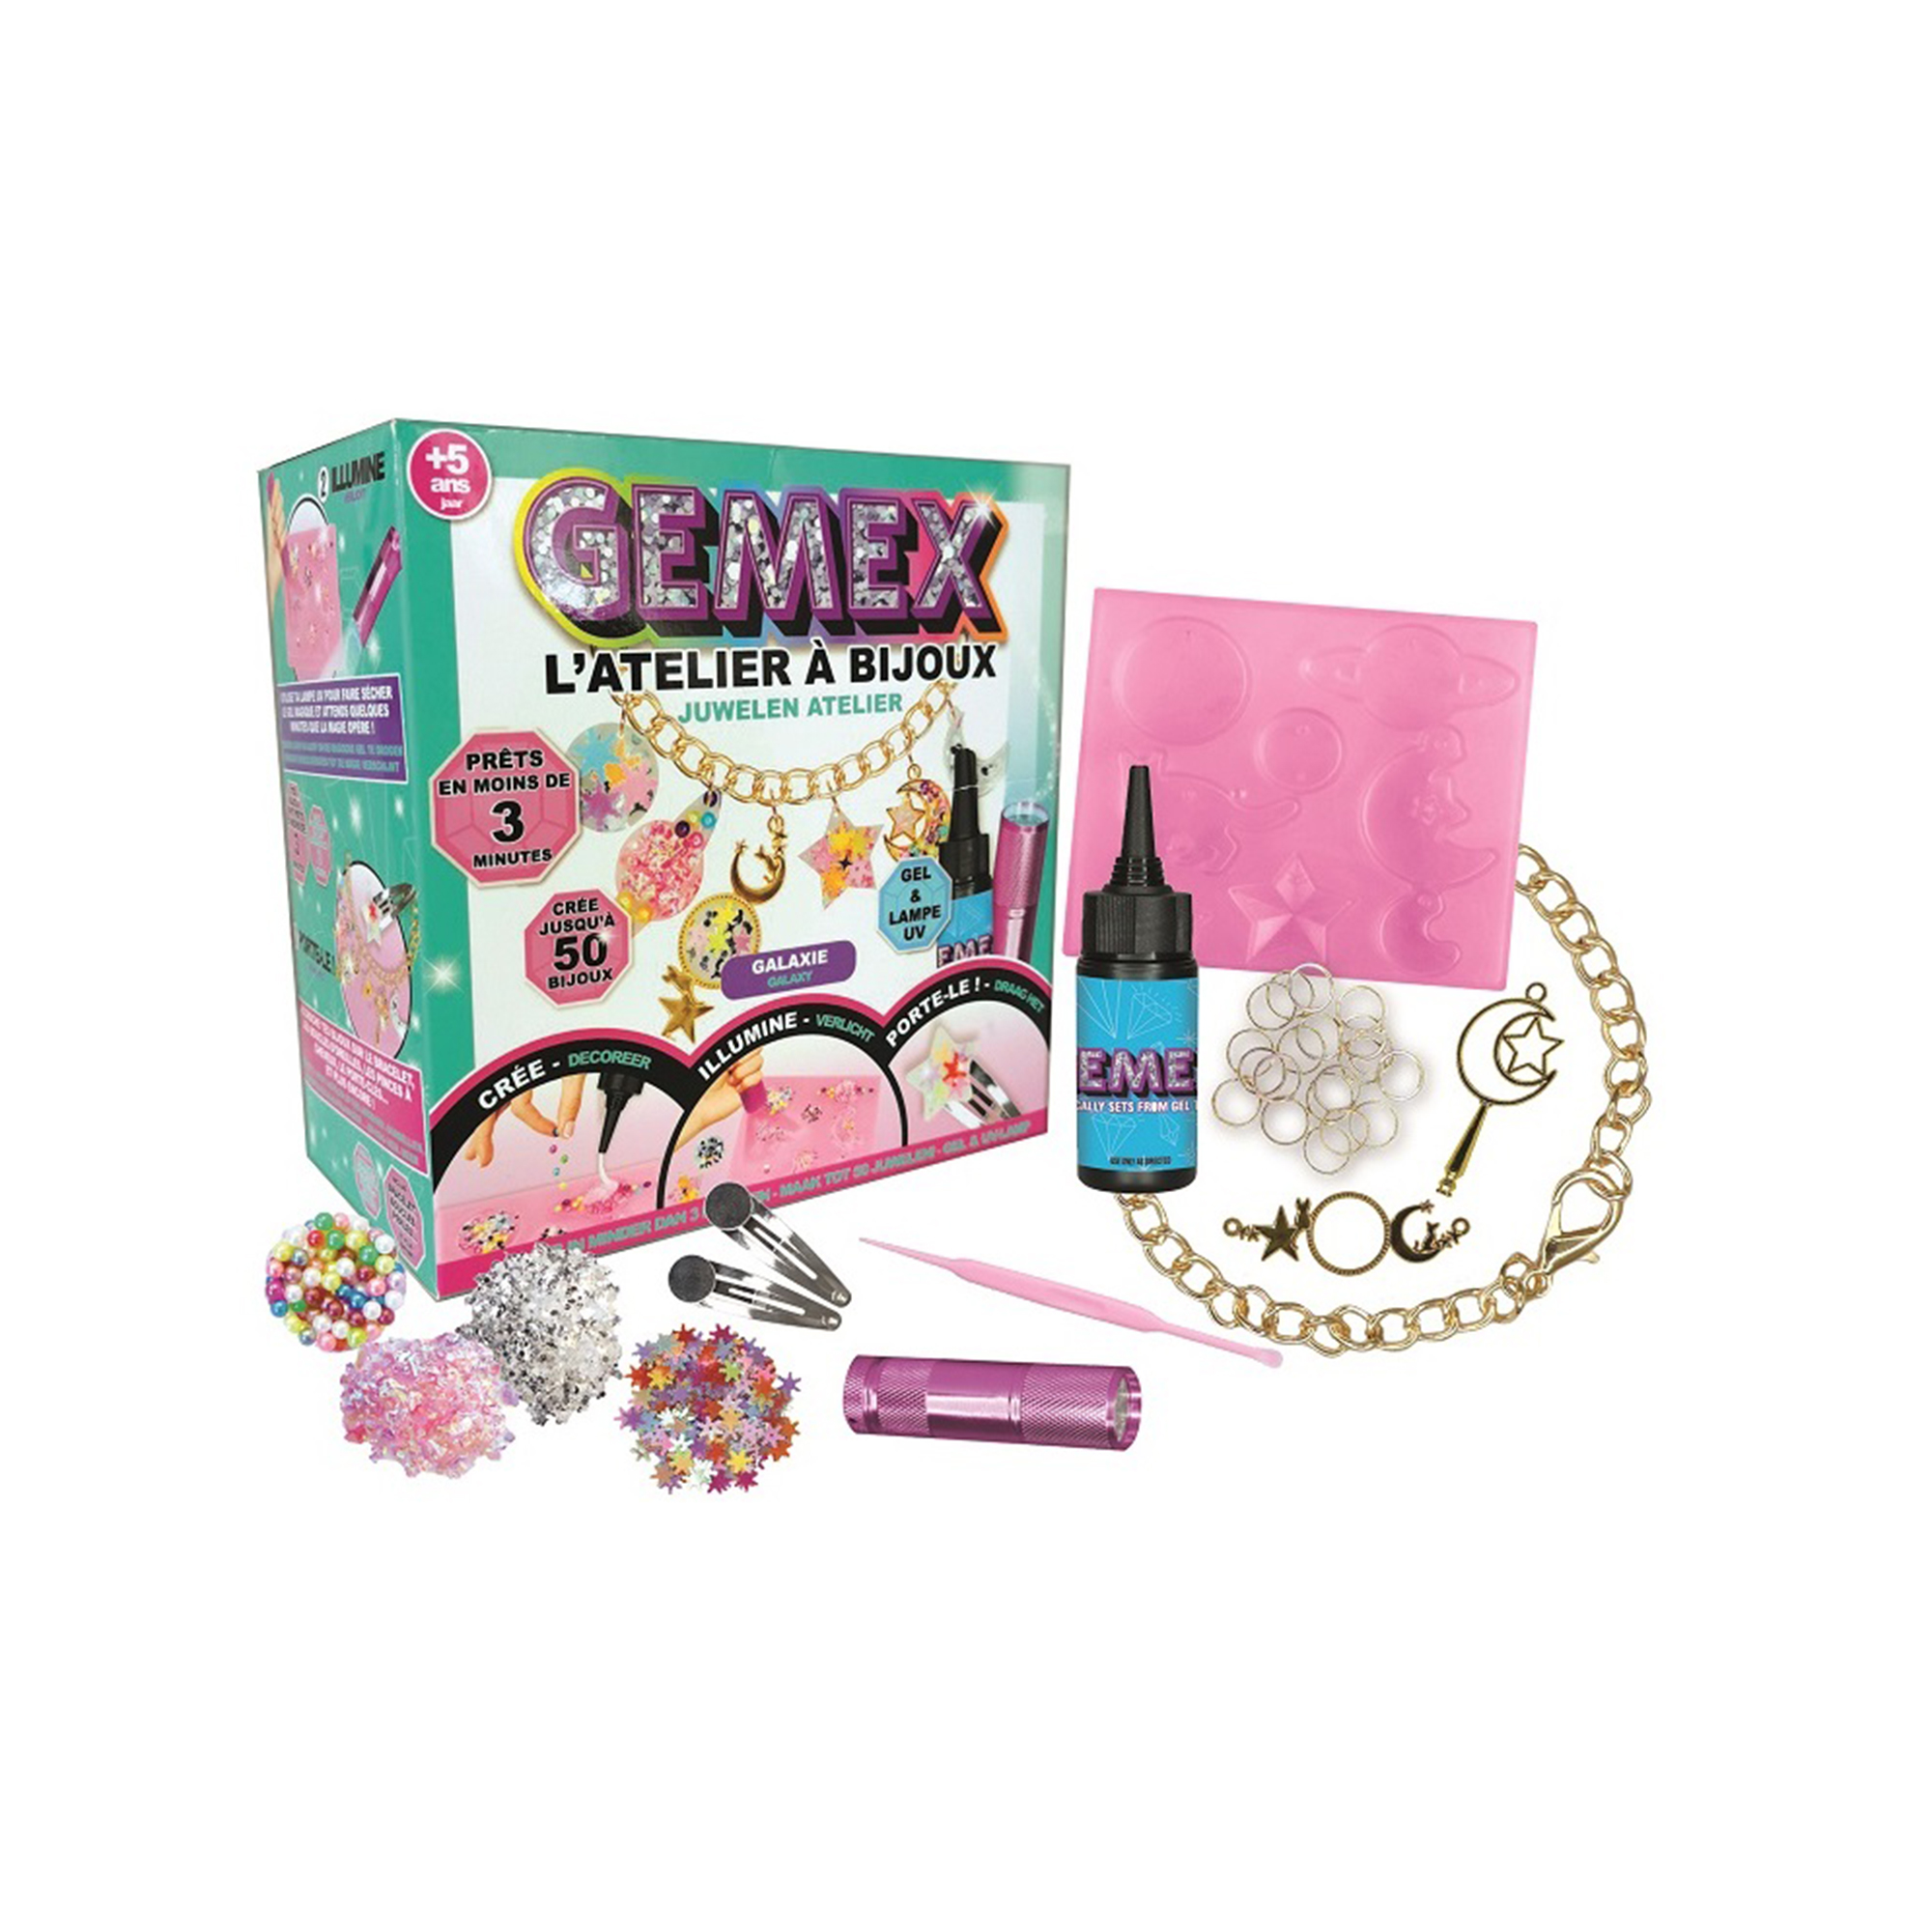 Gemex pack Galaxie coffret